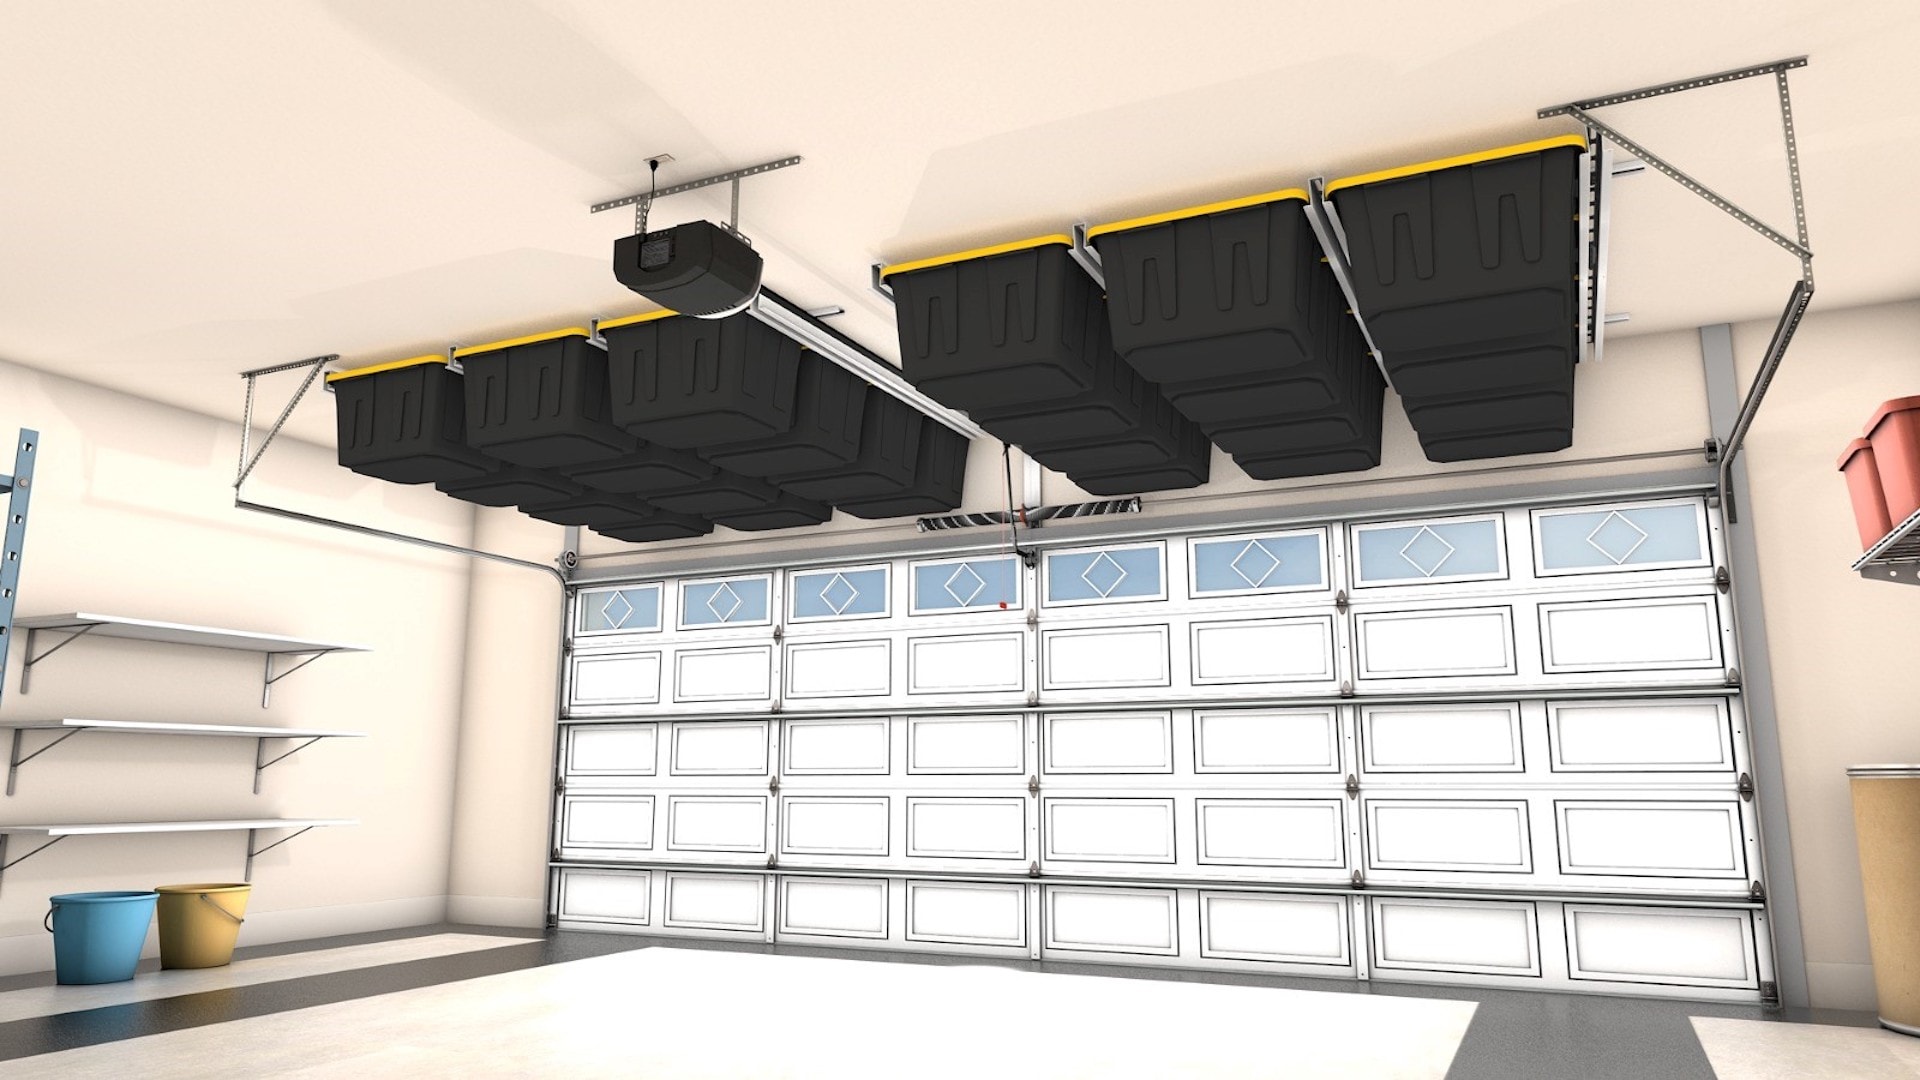 CeilingSAM Overhead Garage Storage 450-lb in White Steel (86-in W x 3-in D)  in the Overhead Garage Storage department at